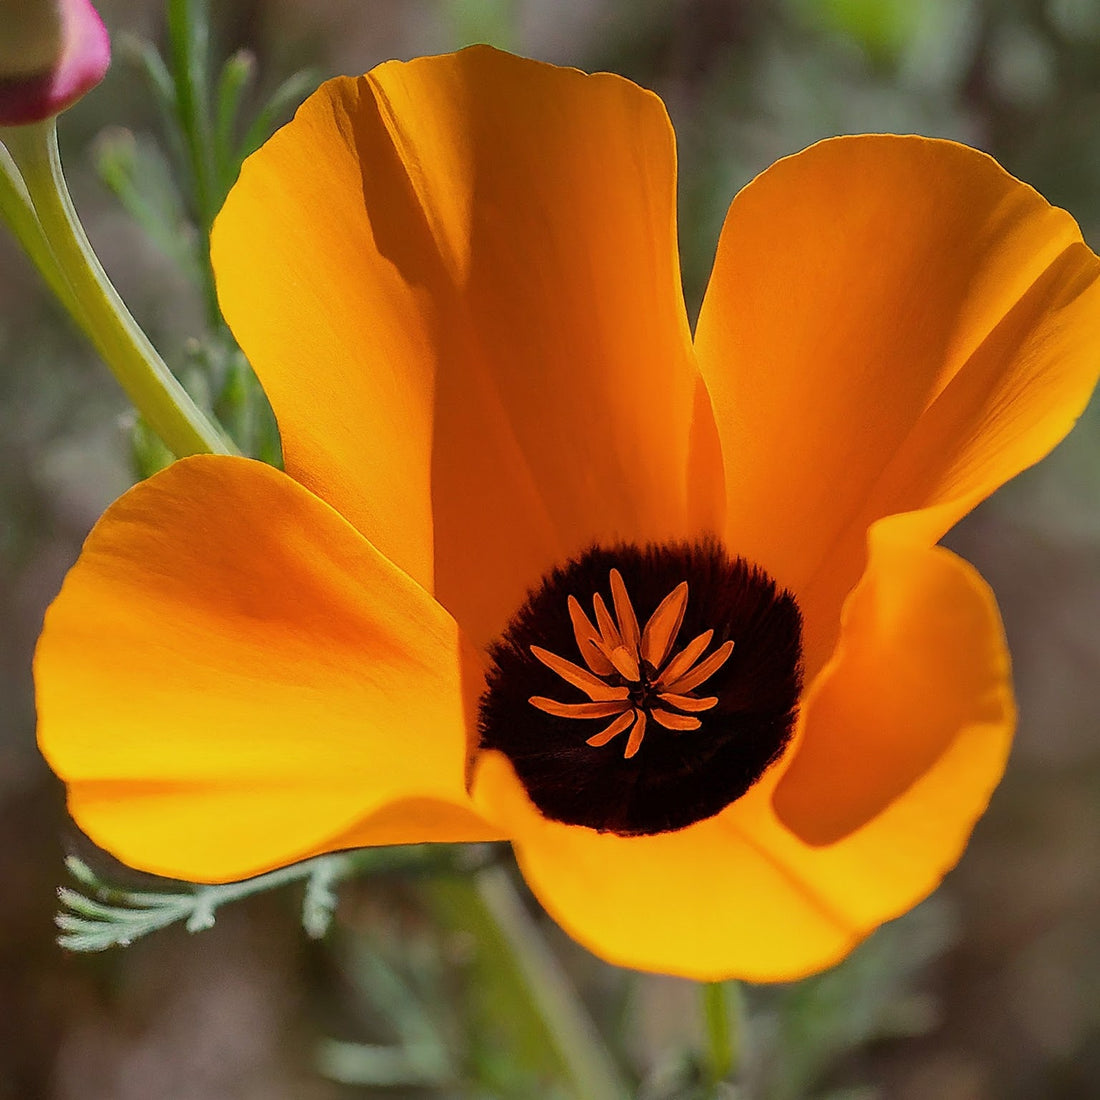 A california poppy flower